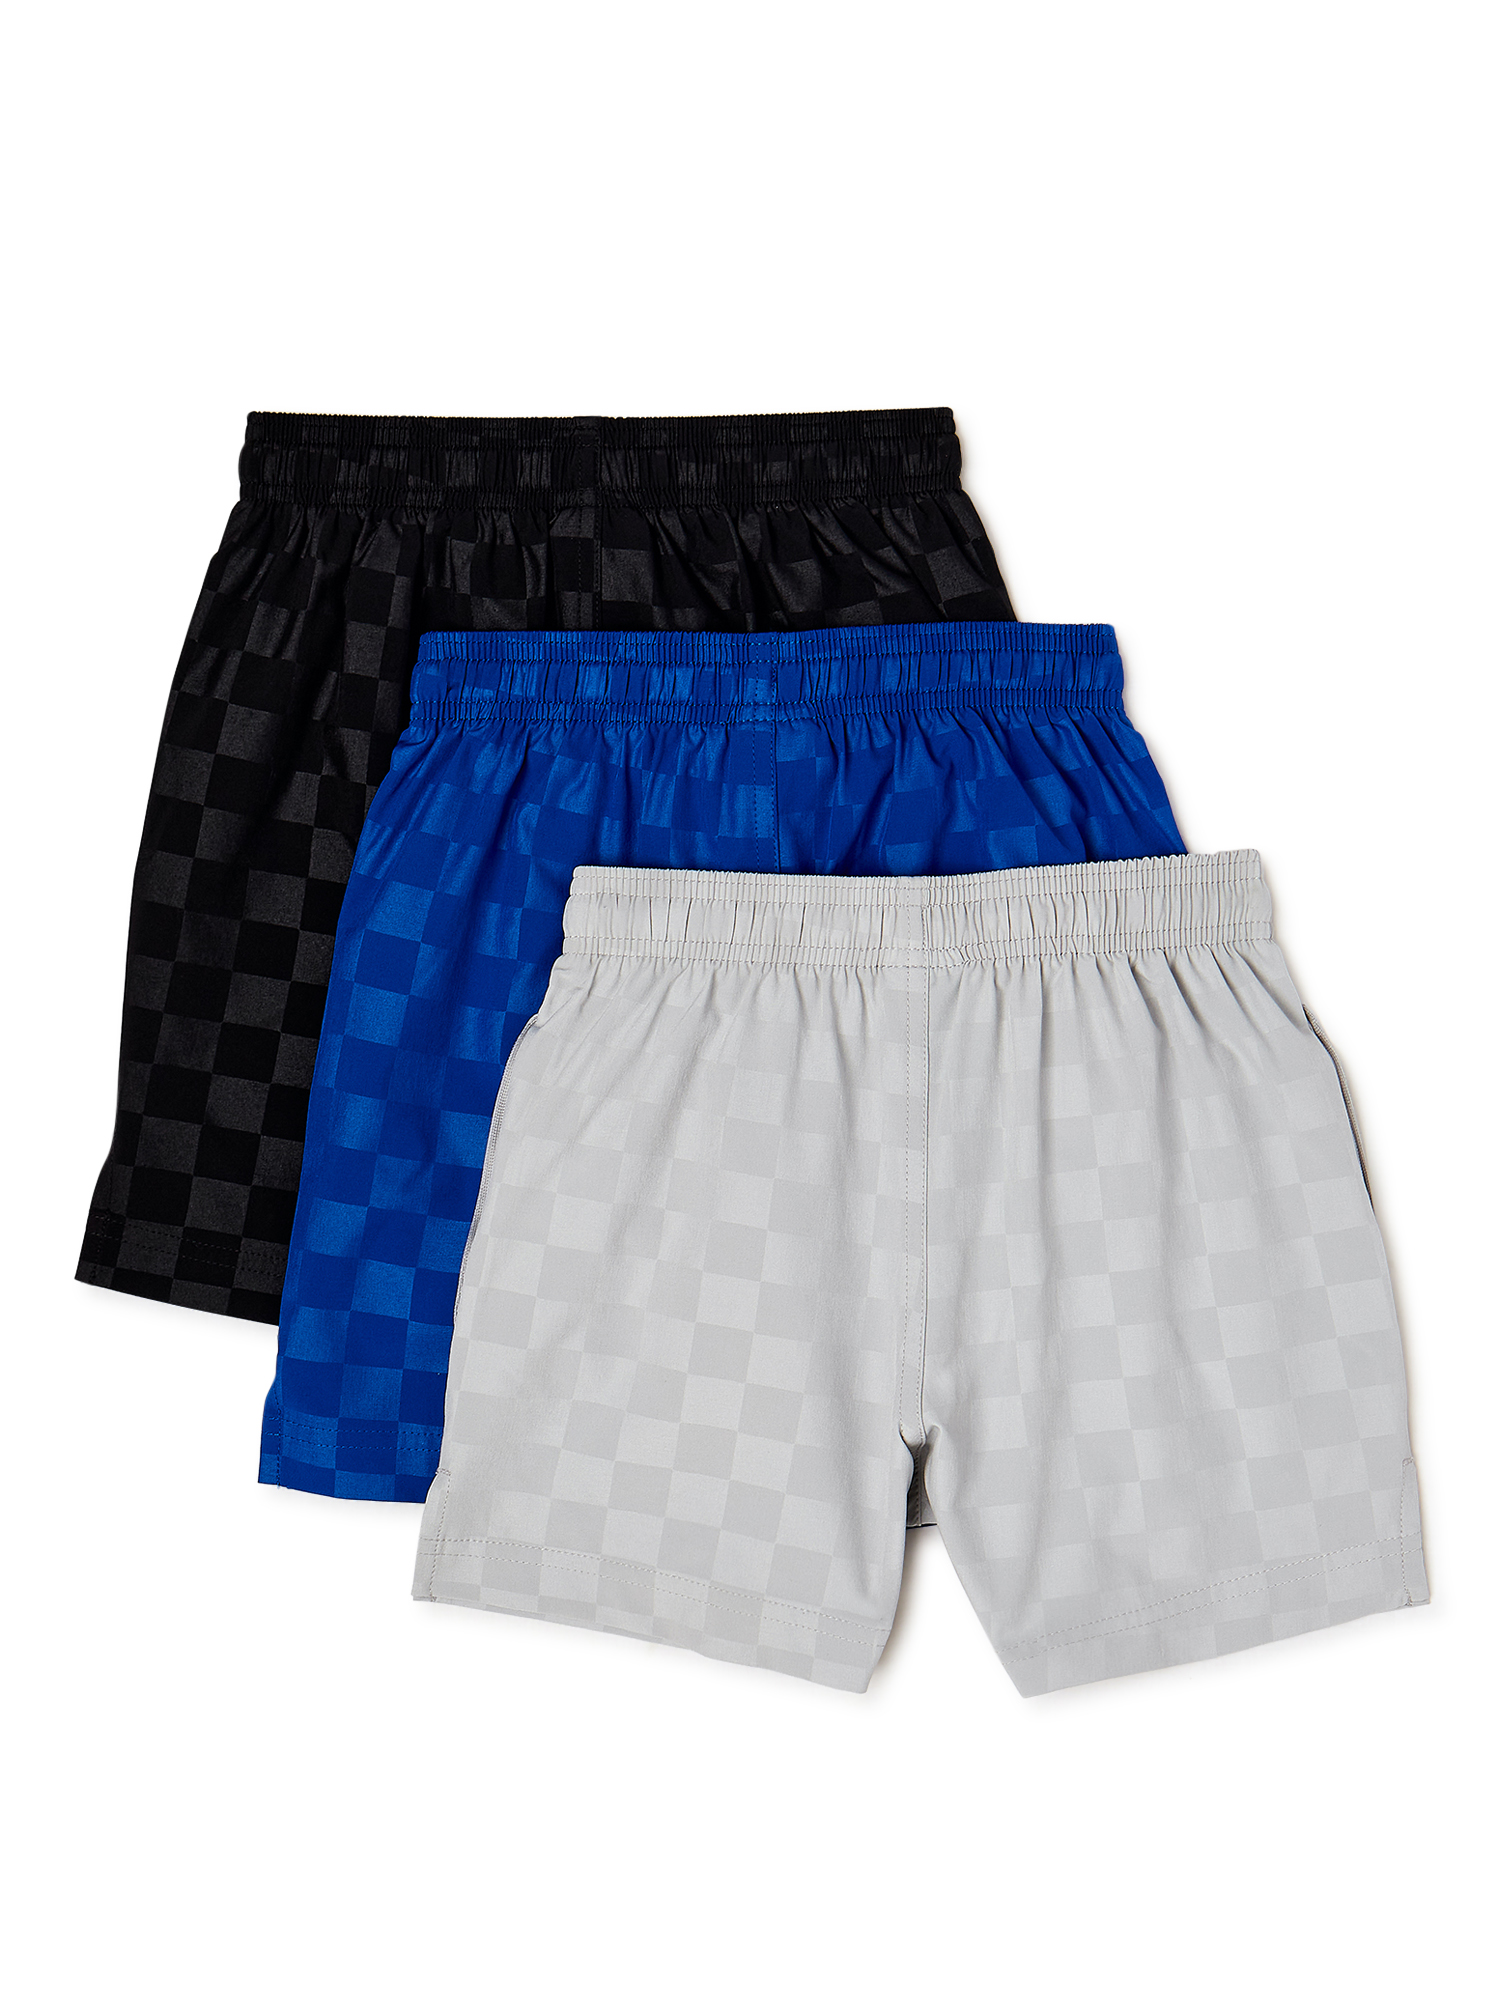 Athletic Works Boys Soccer Shorts, 3-Pack, Sizes 4-18 & Husky - image 2 of 3